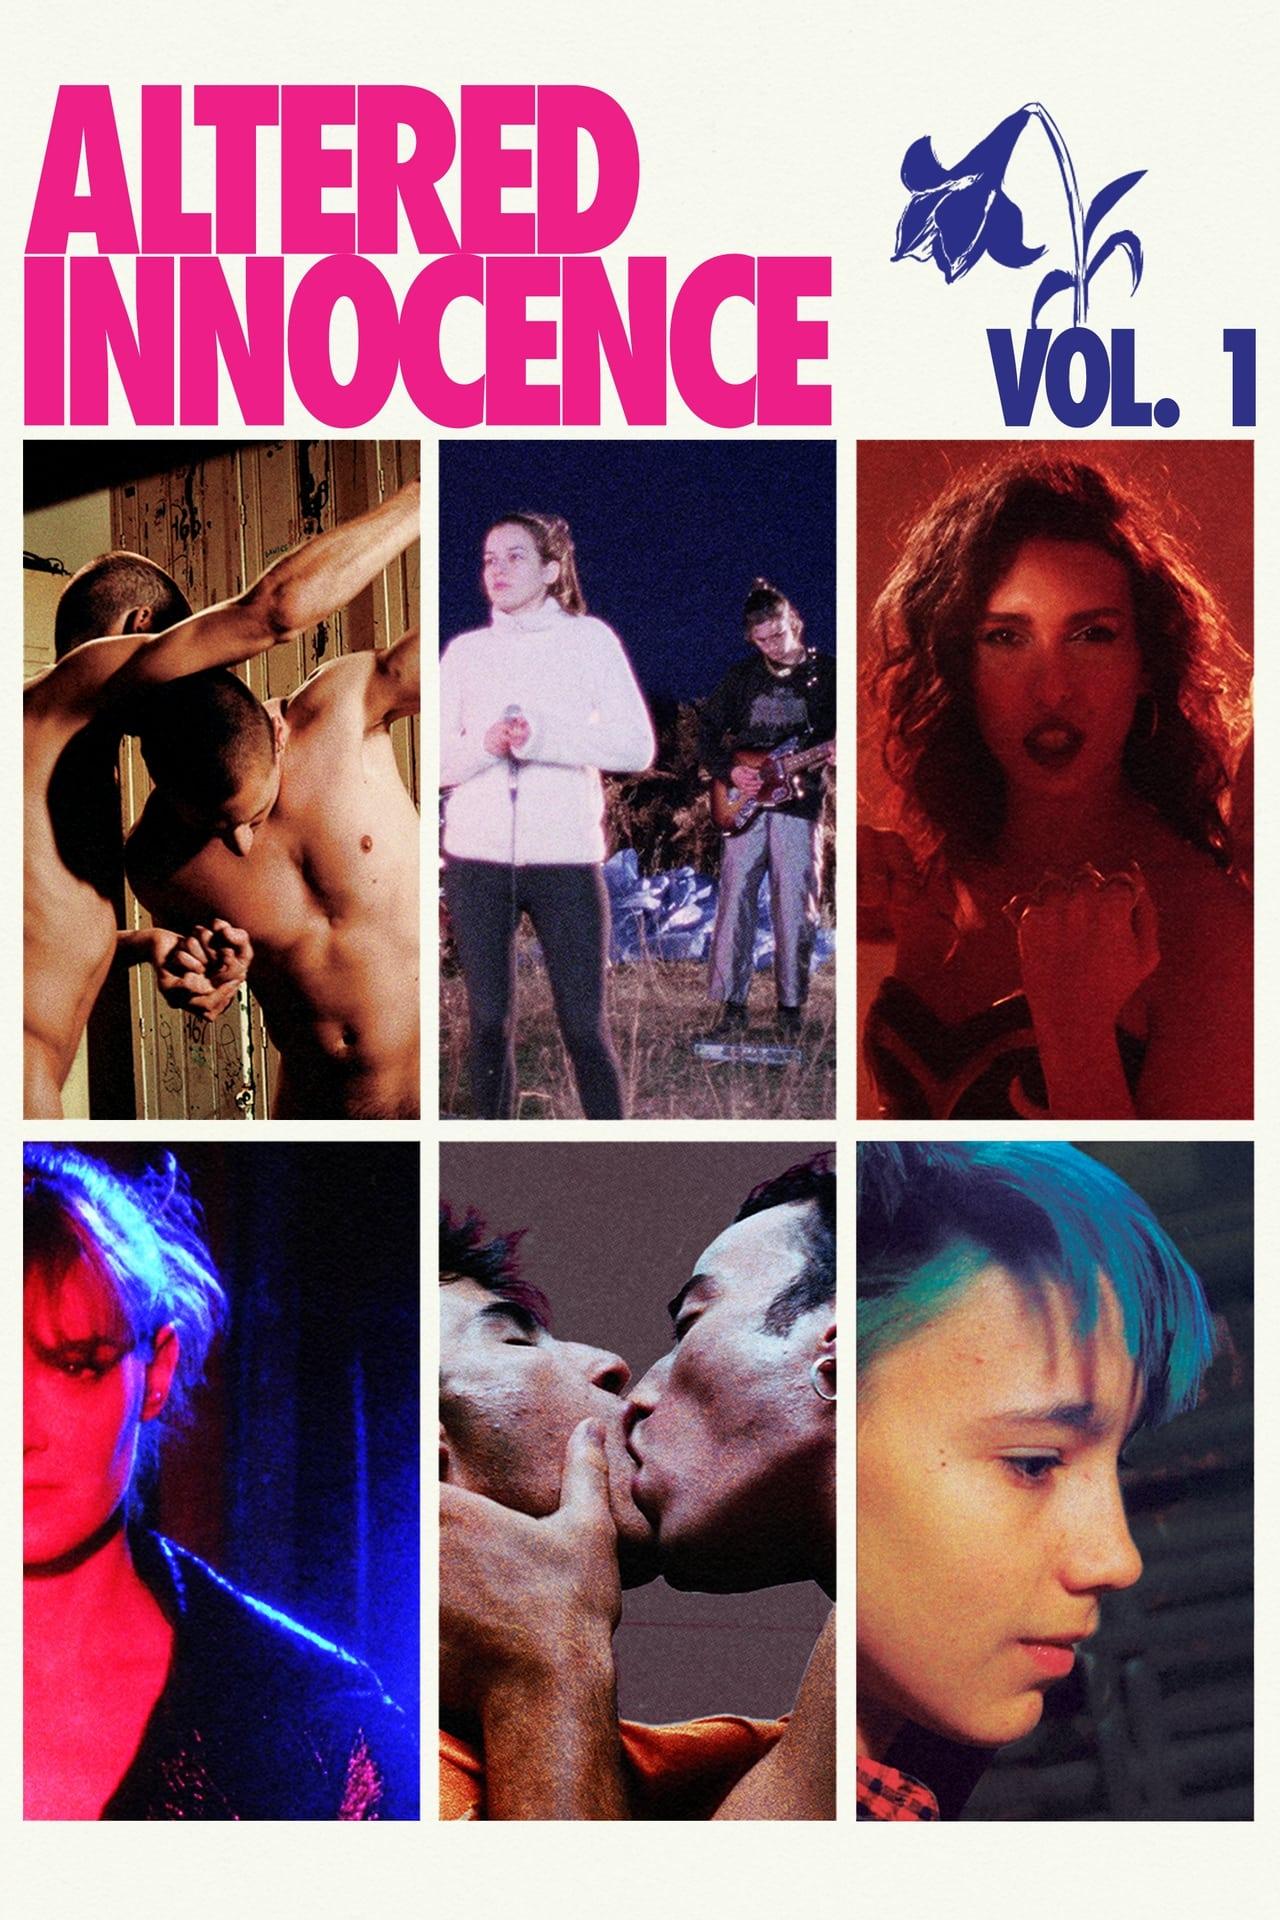 Altered Innocence Vol. 1 poster